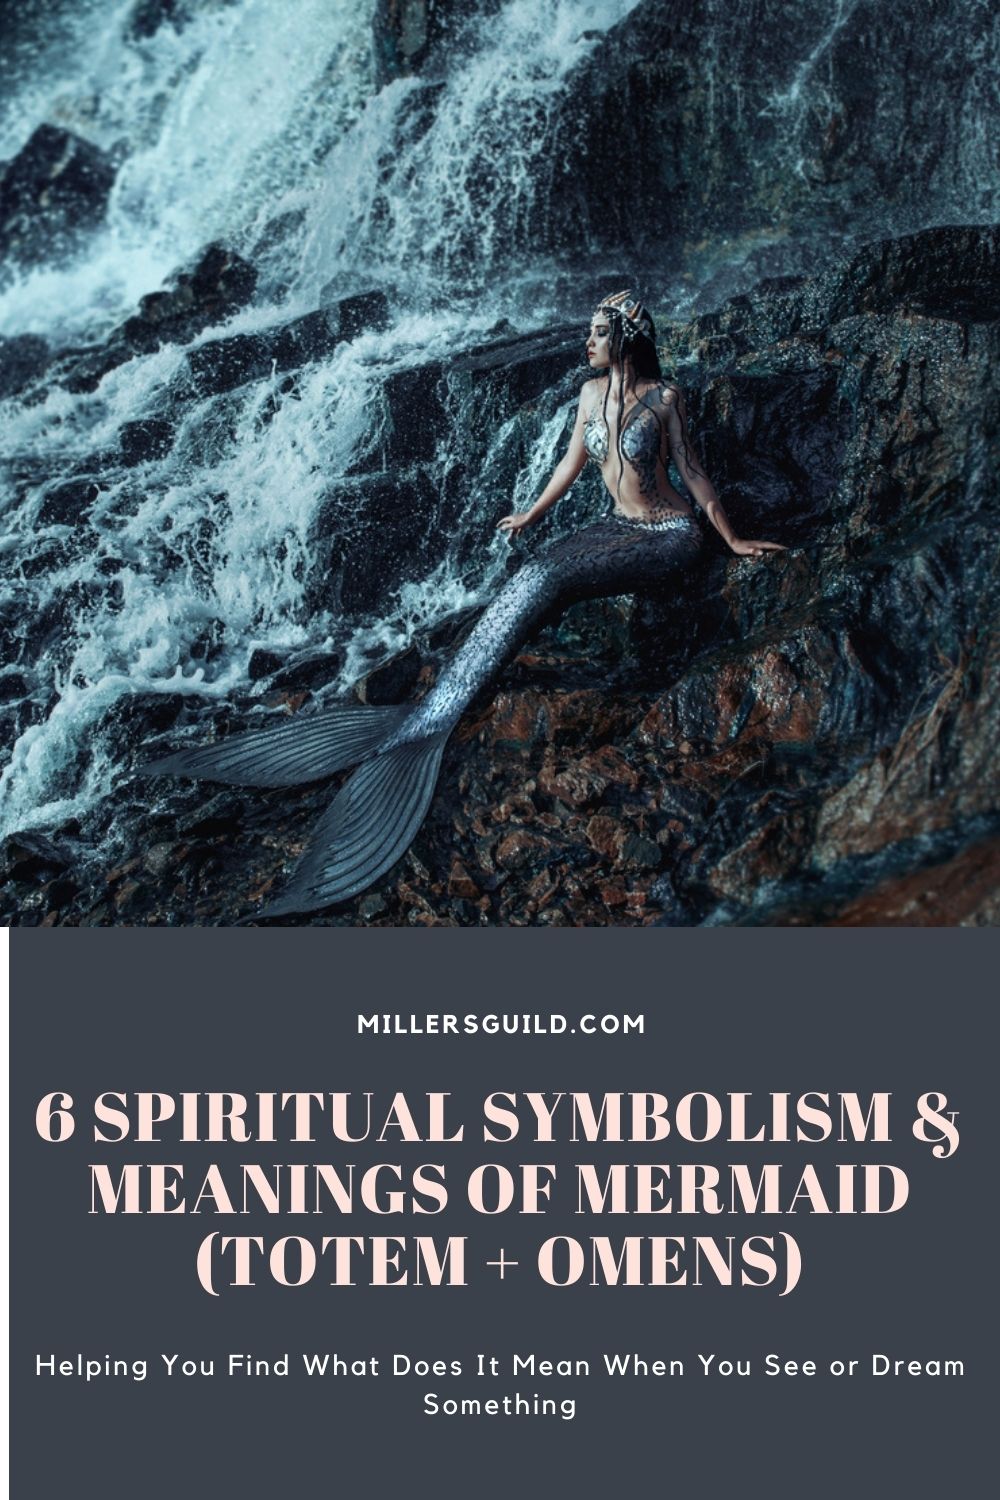 6 Spiritual Symbolism & Meanings of Mermaid (Totem + Omens) 1